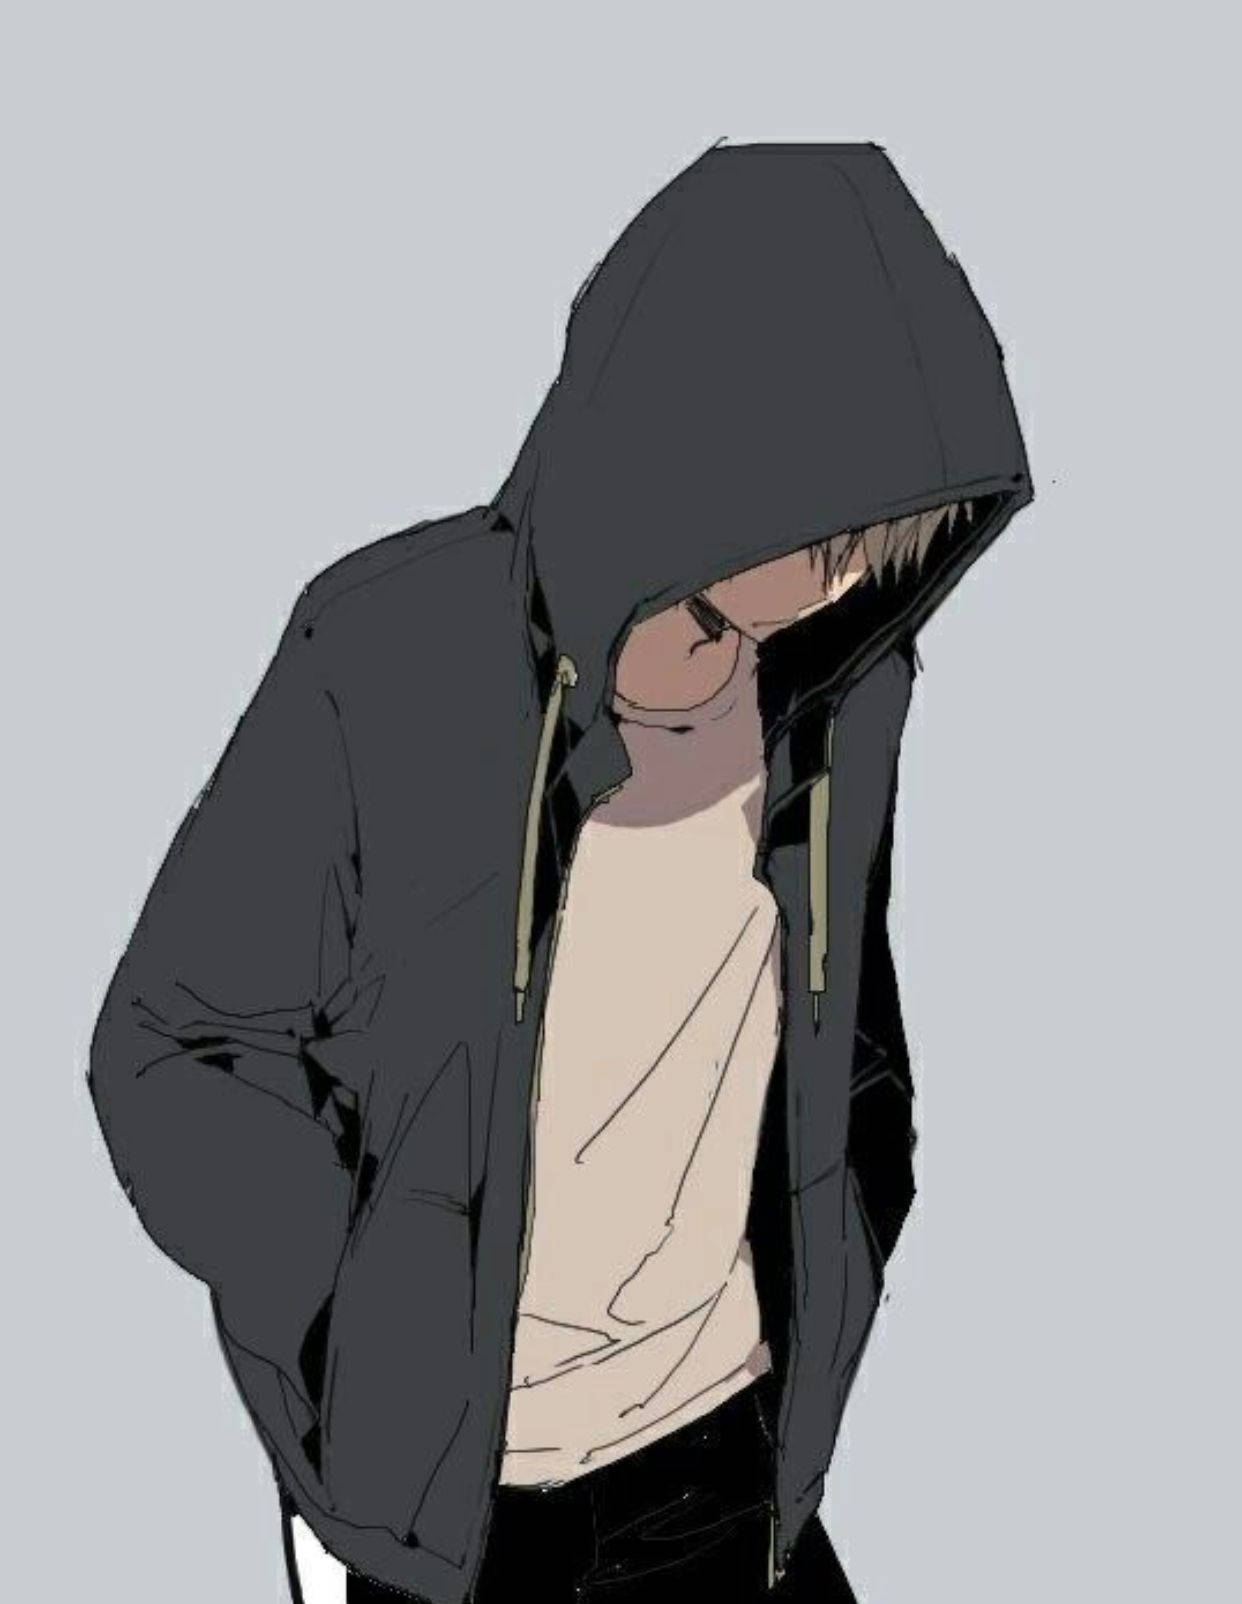 Hooded Anime Boy Sad Aesthetic Wallpaper